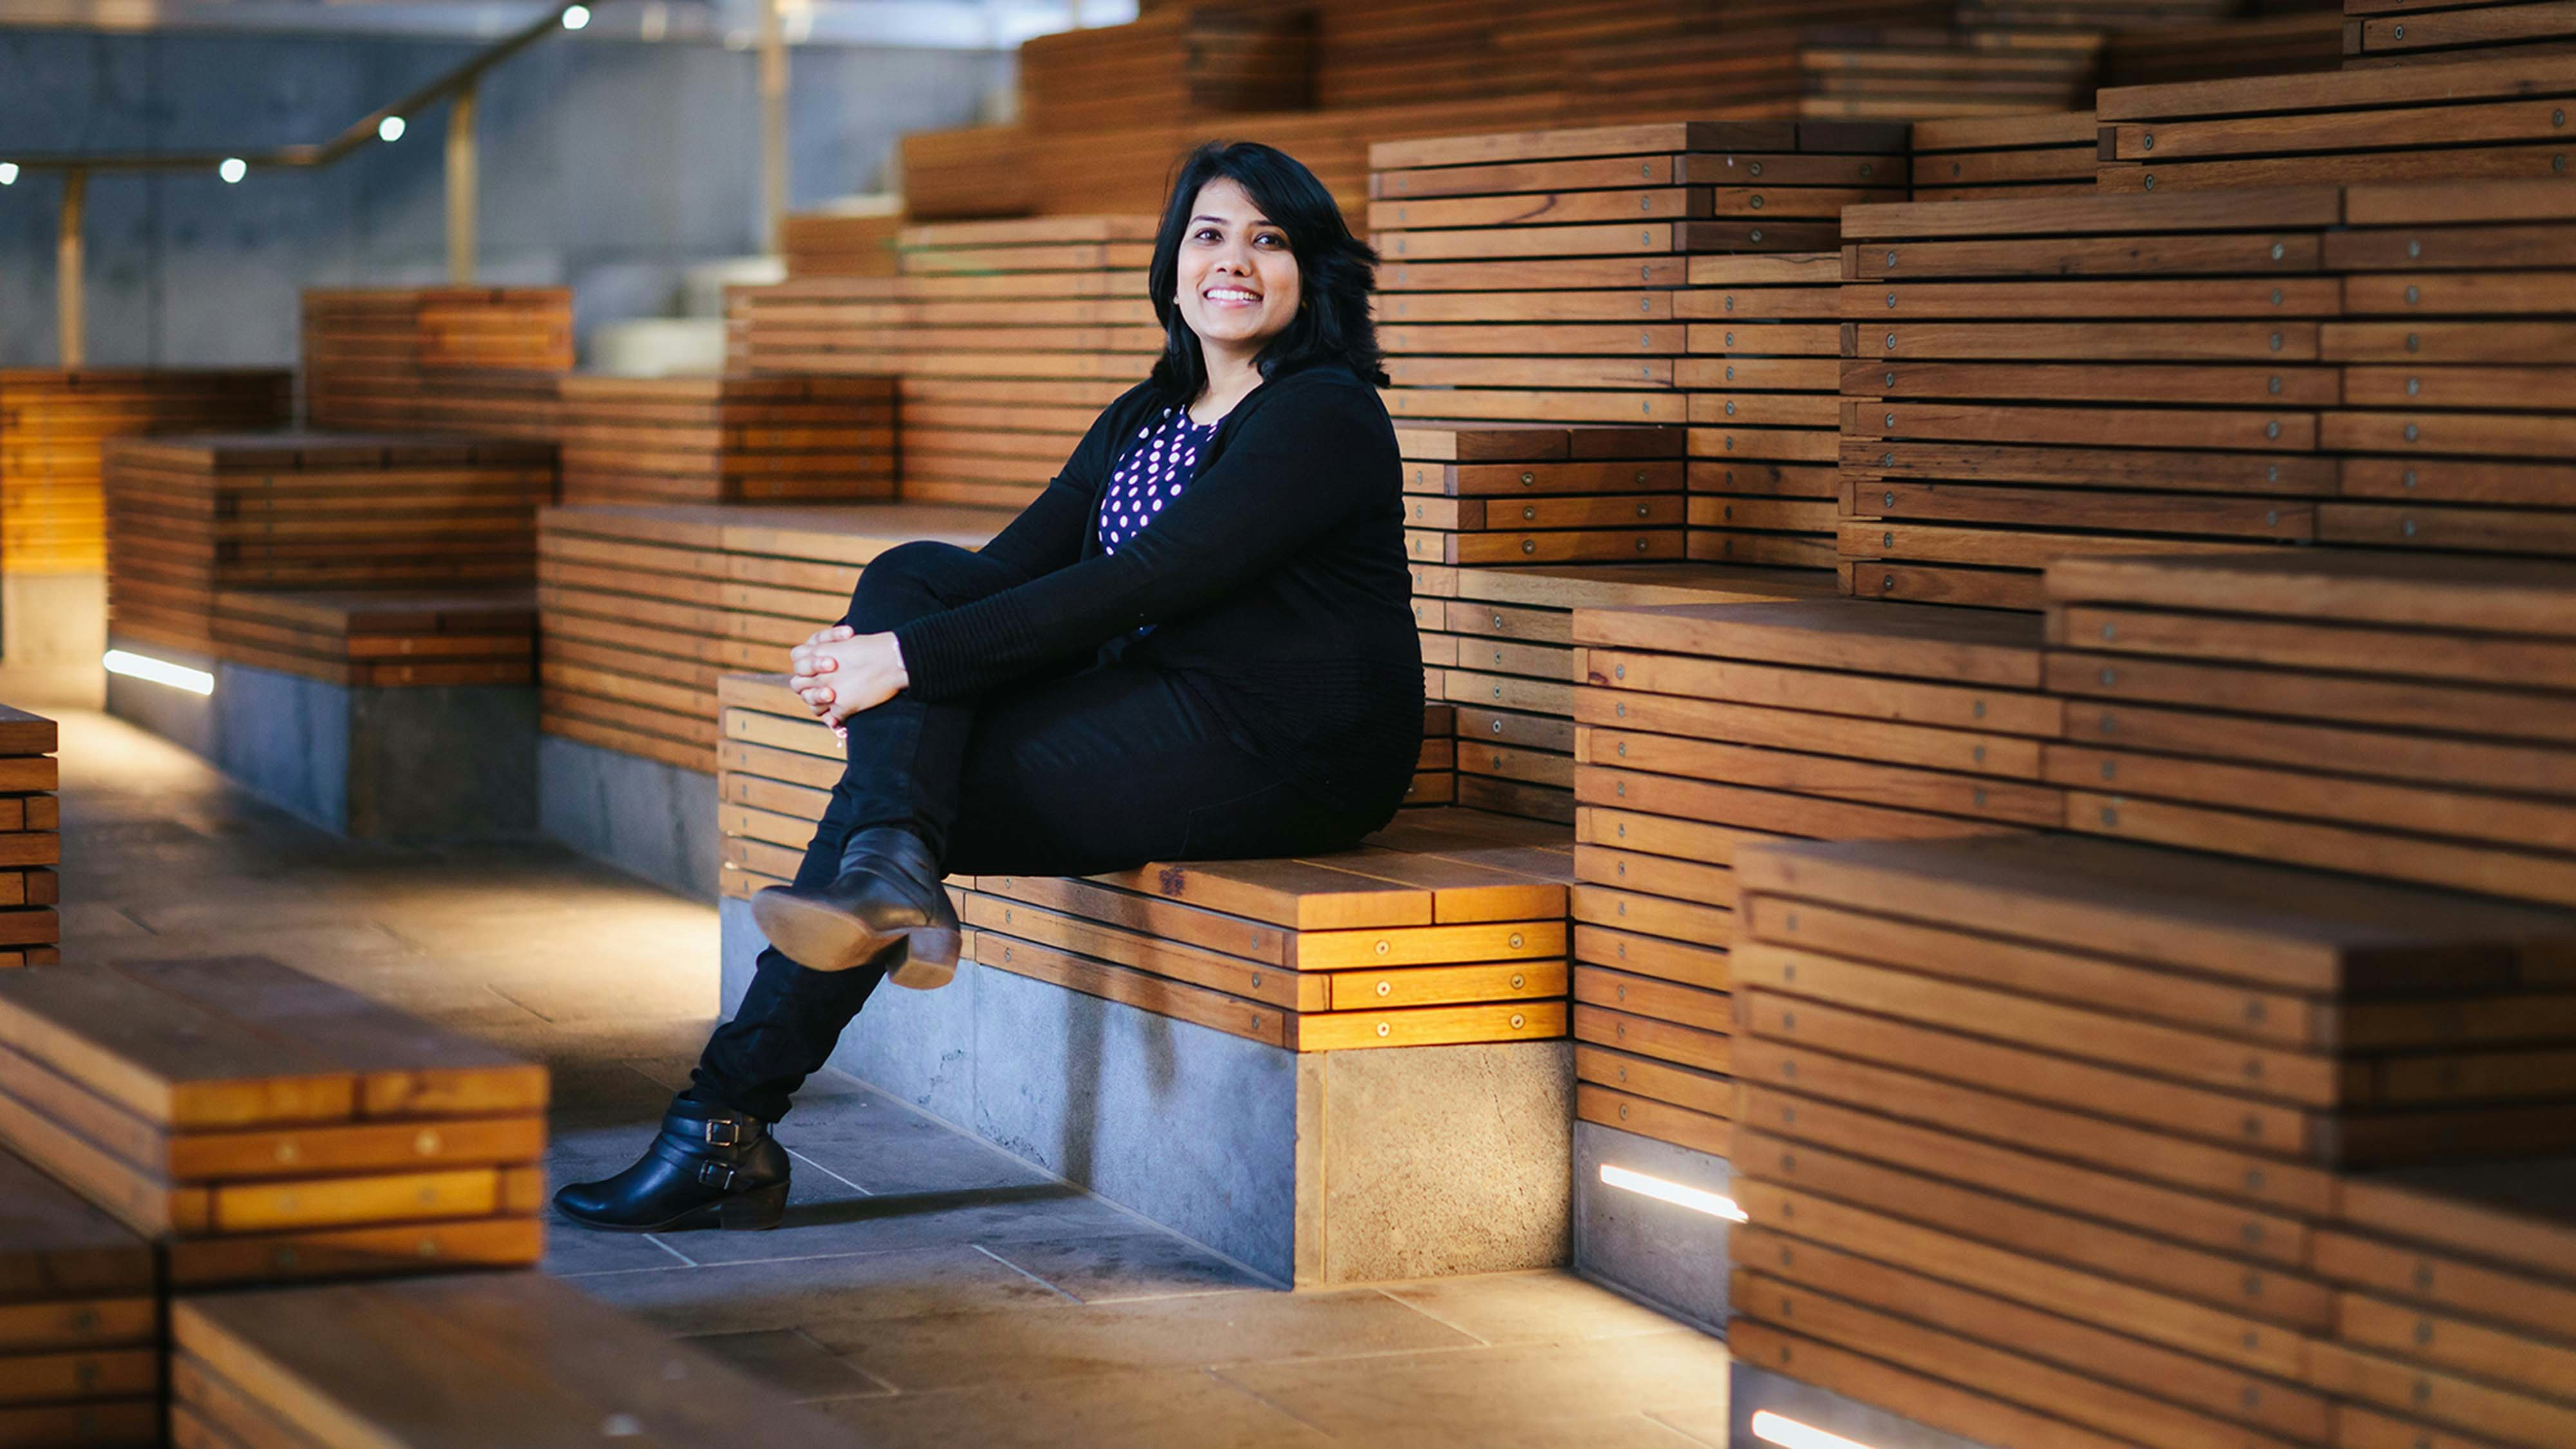 Femila Jesline sitting on a wooden bench